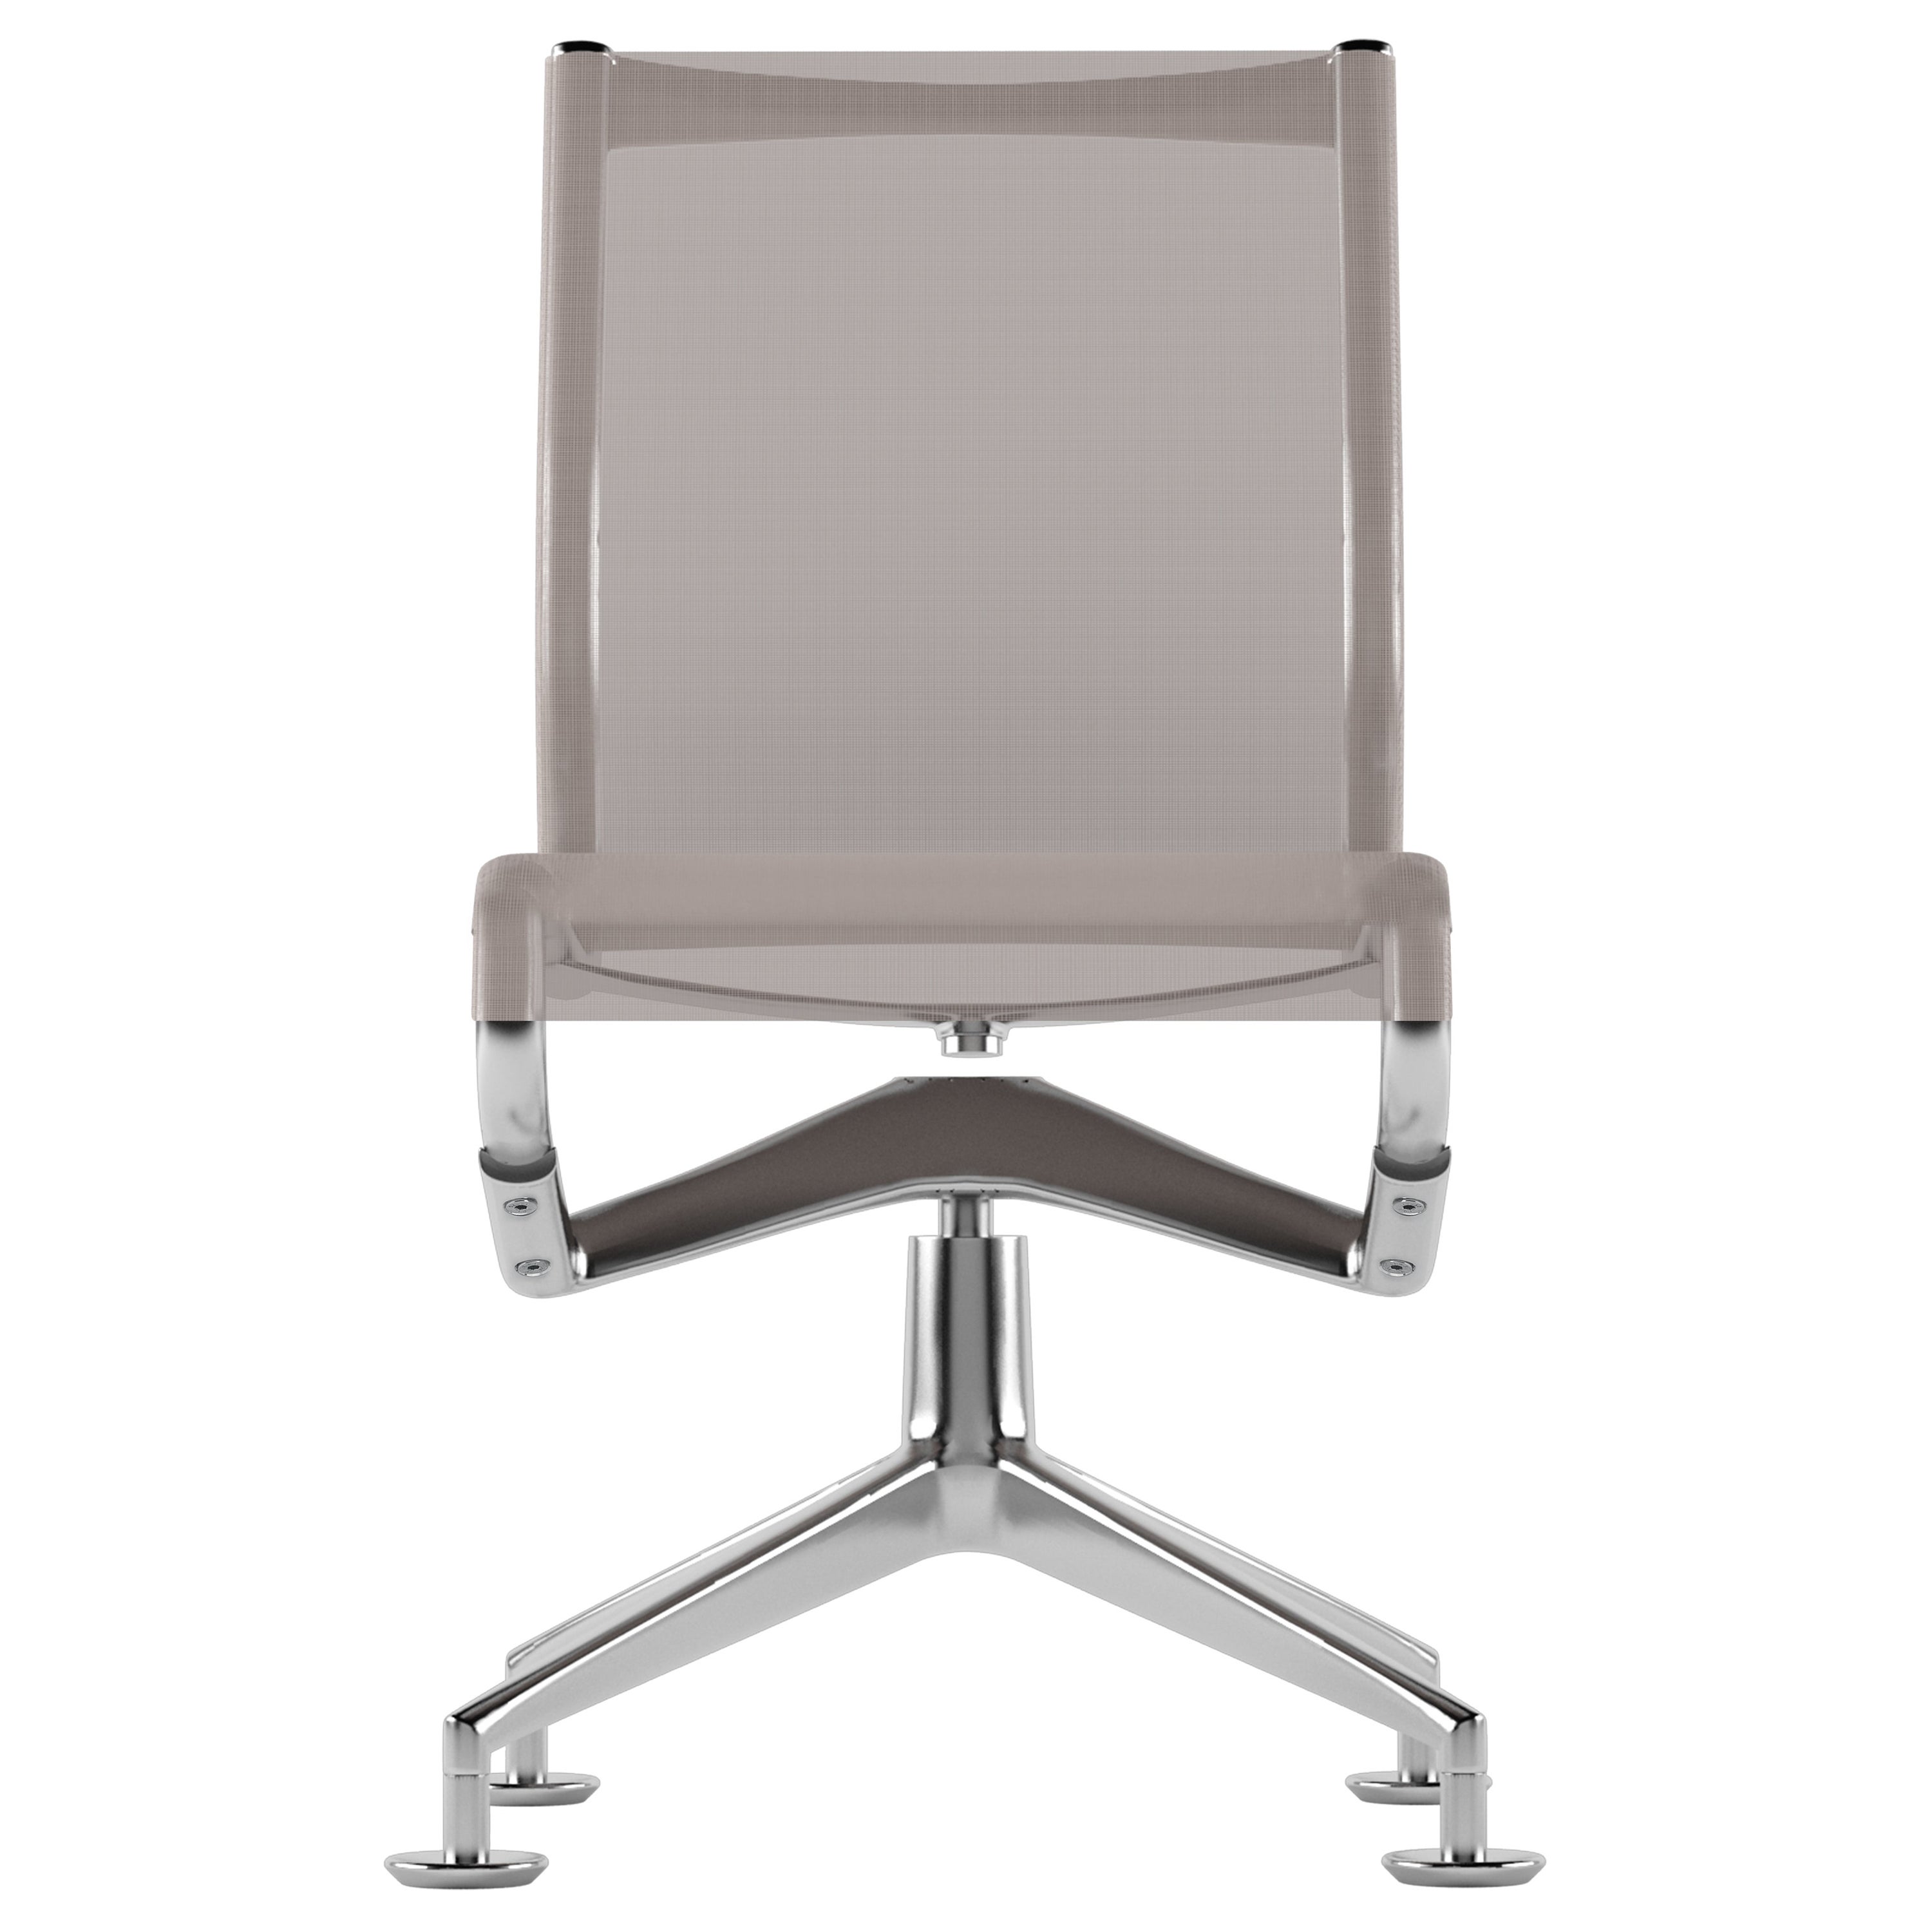 Alias 436 Meetingframe Swivel Chair in Sand Mesh with Chromed Aluminum Frame For Sale